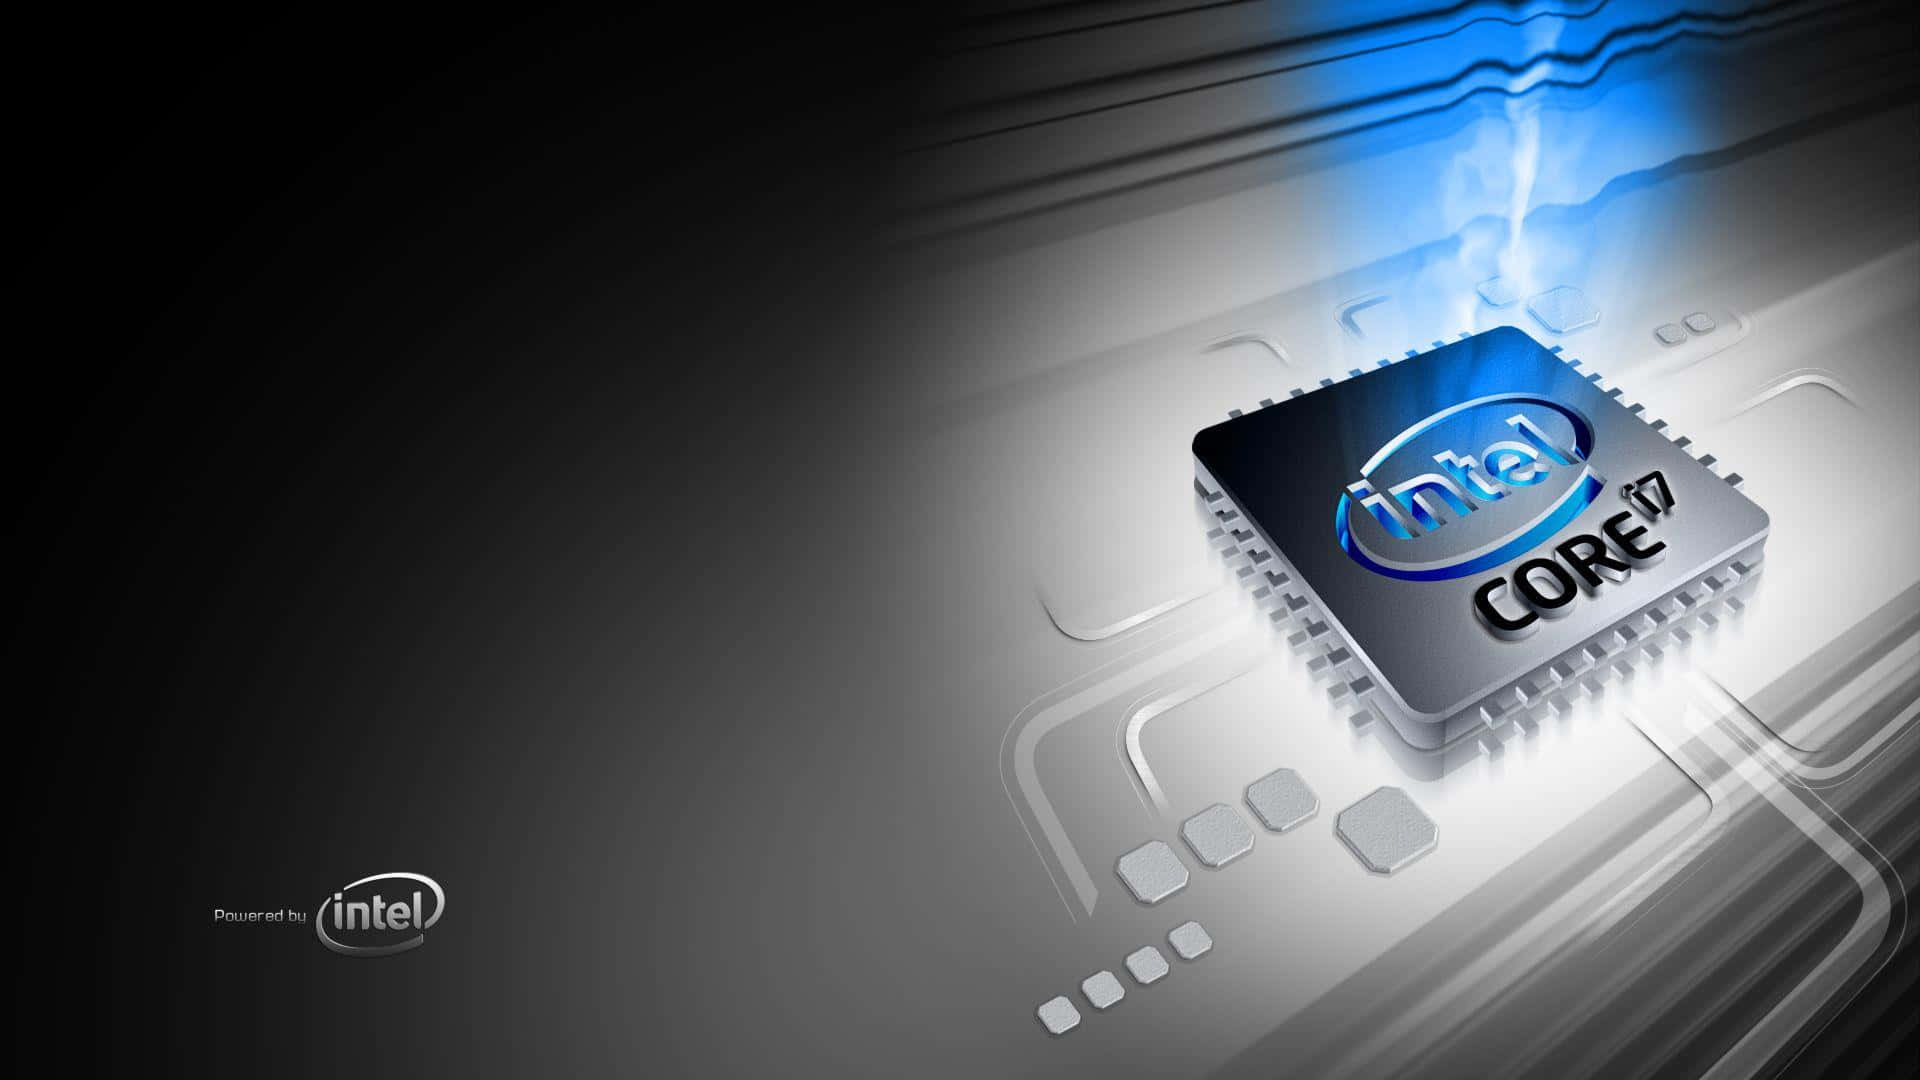 Intel Corei7 Processor Promotional Graphic Wallpaper